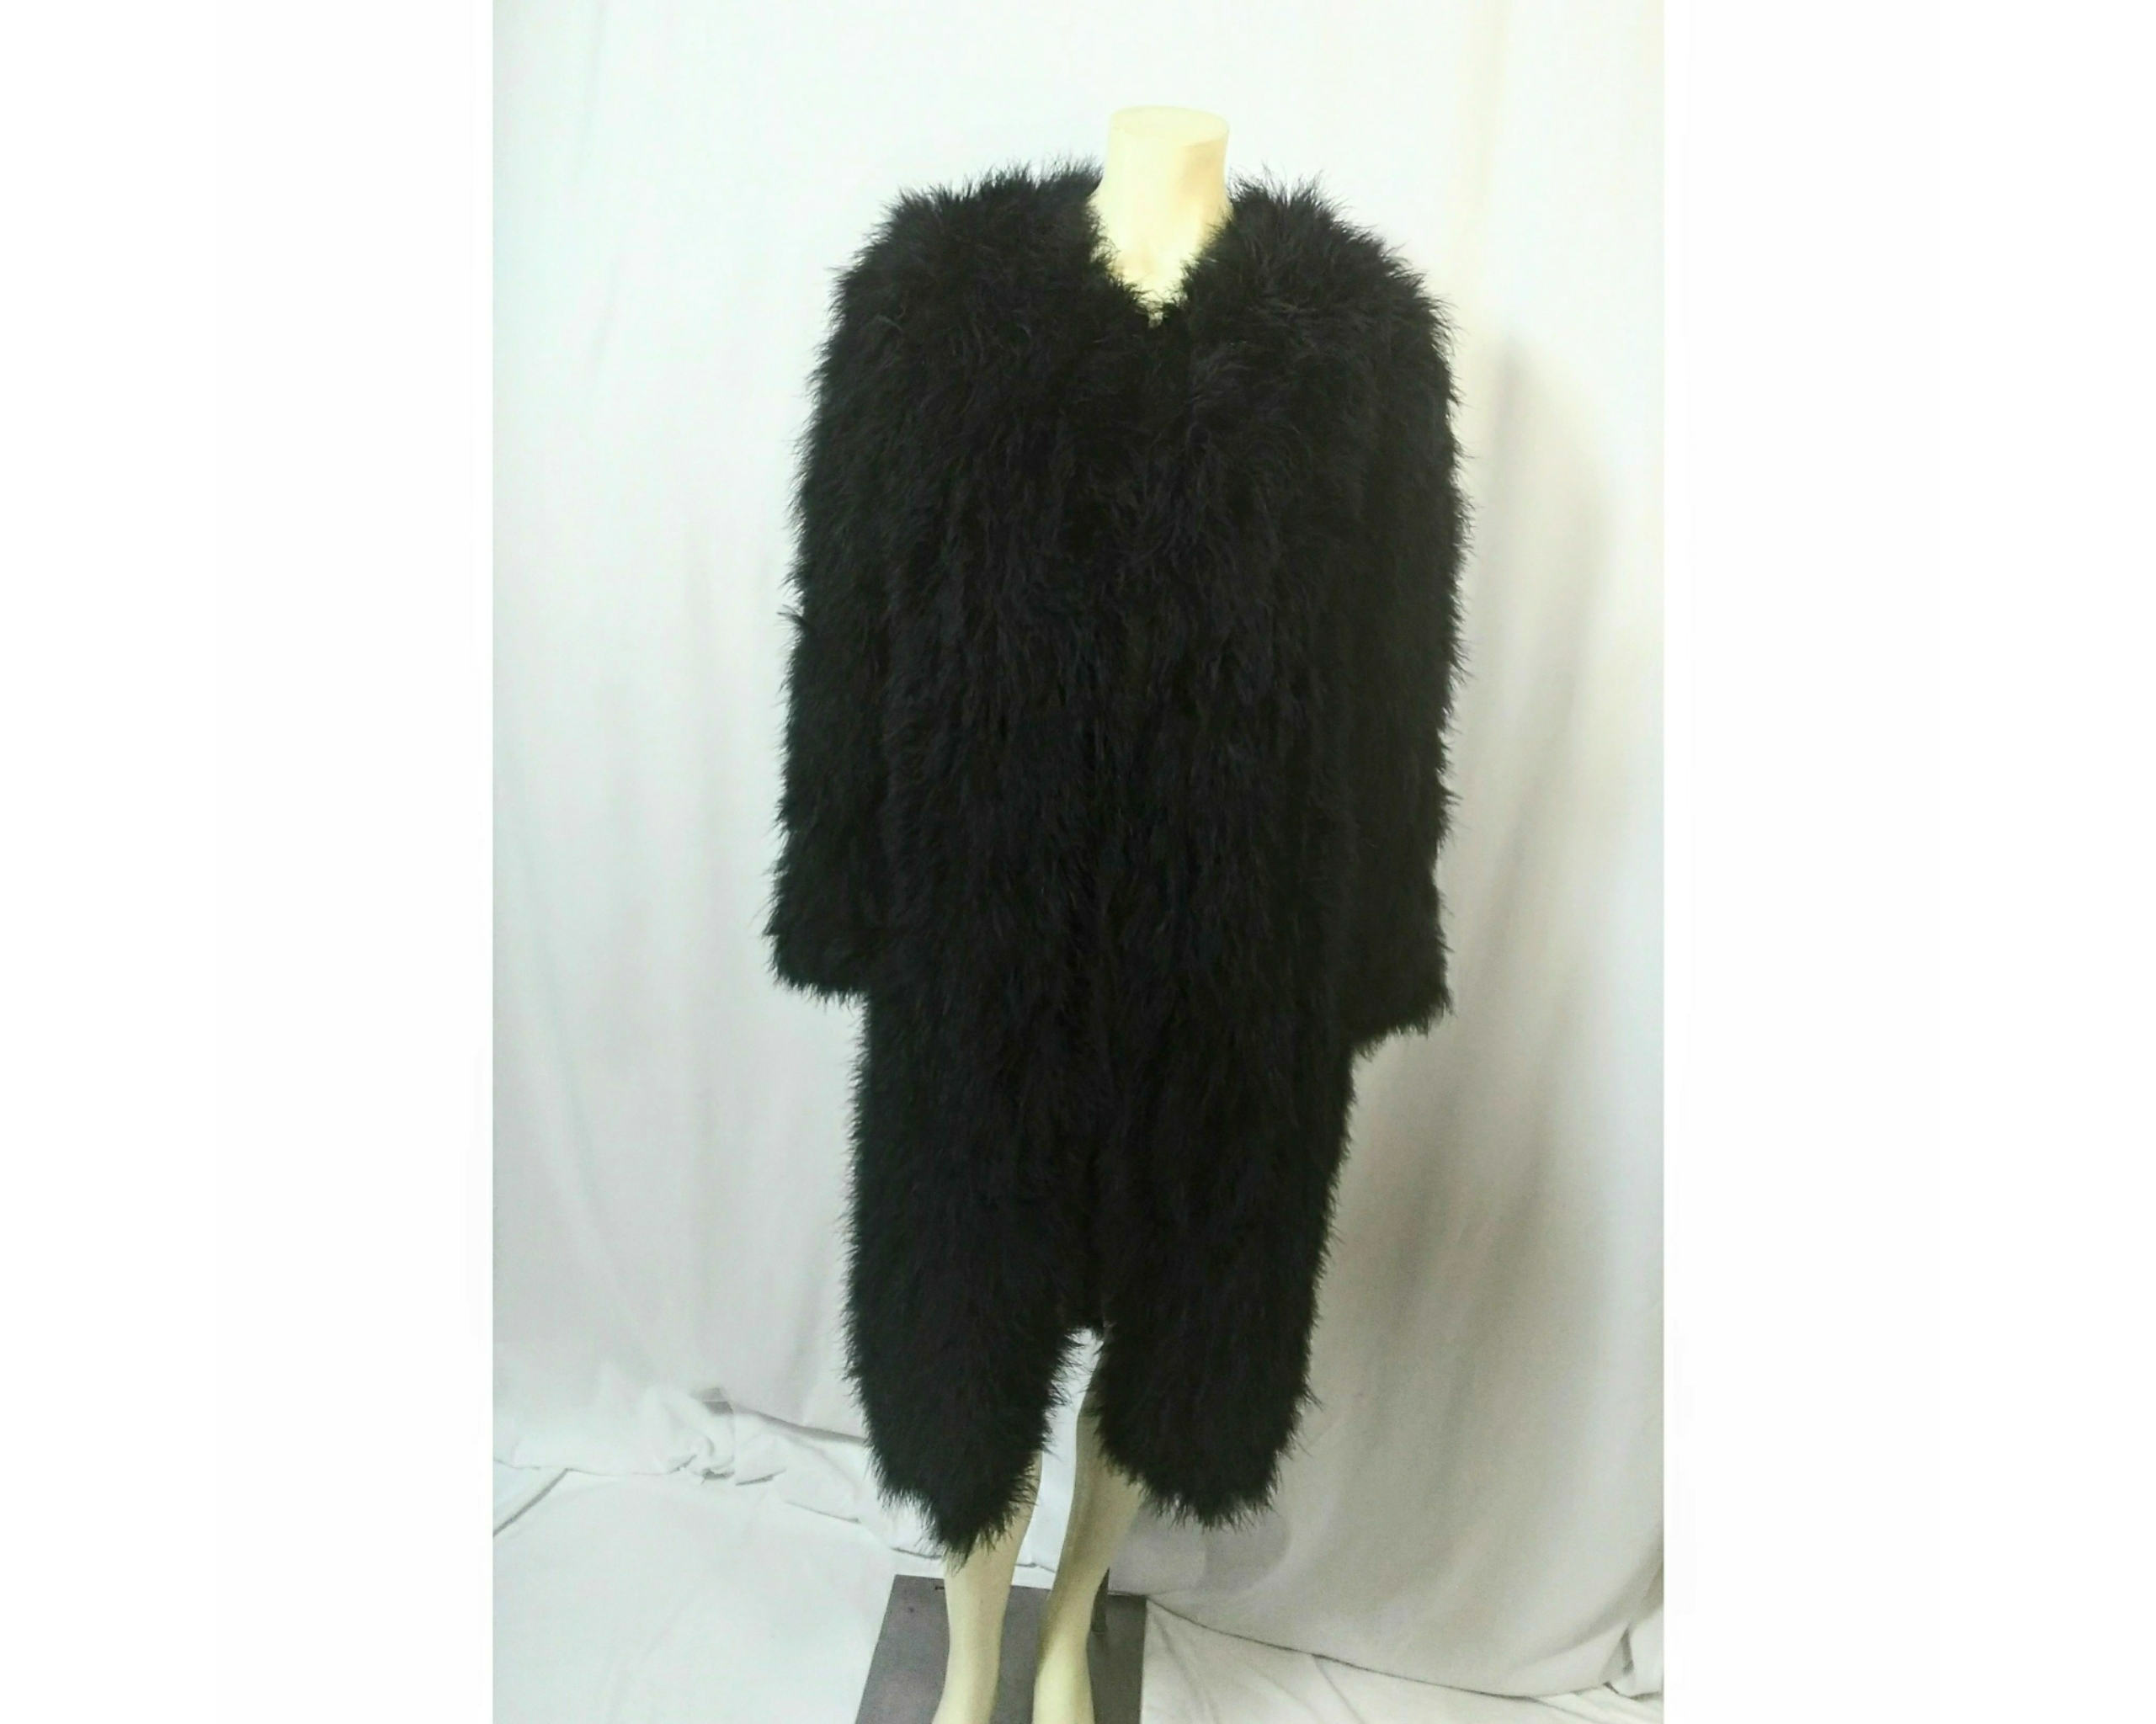 Vintage 1980's Sonia Rykiel Black Marabou Feather Coat